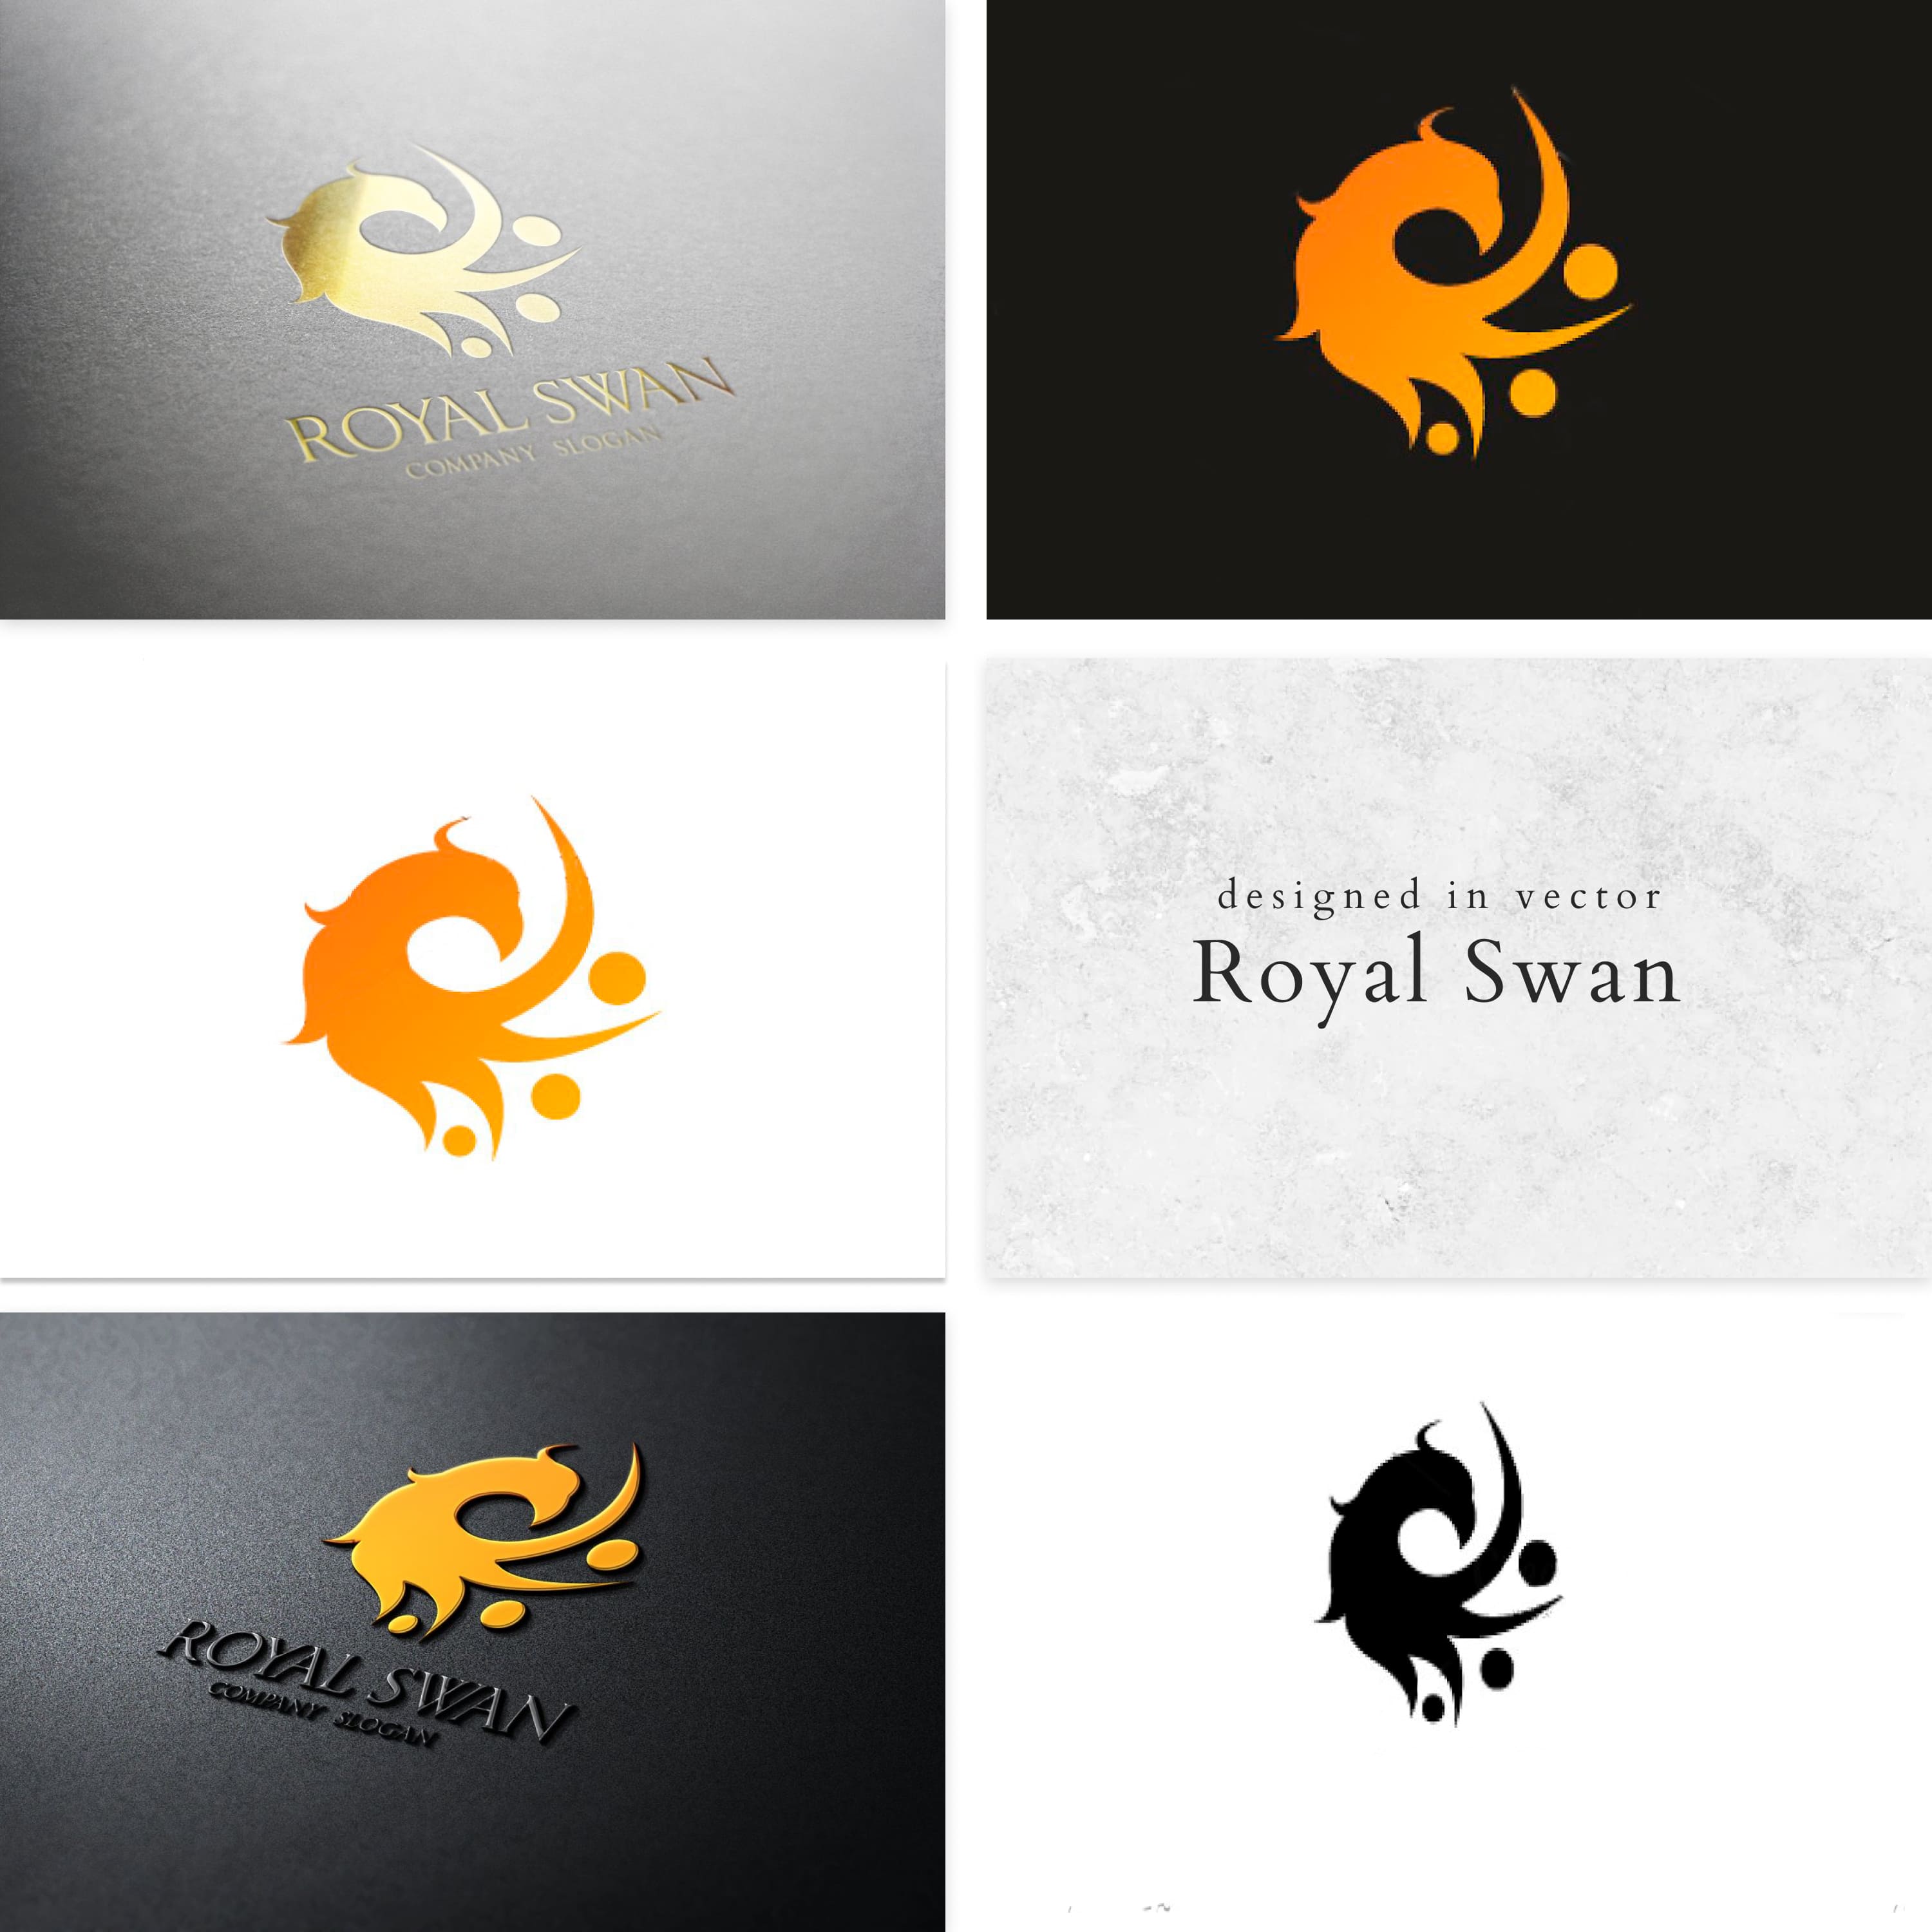 Royal Swan cover.